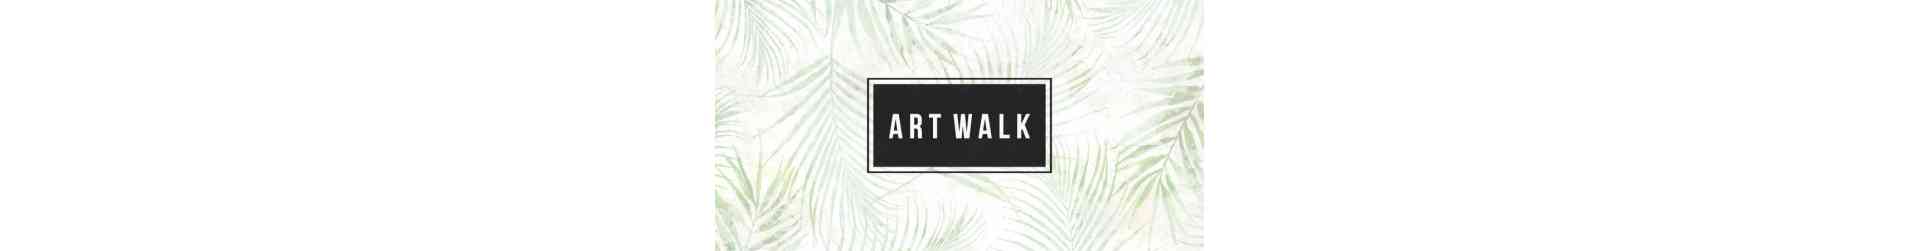 ART WALK 